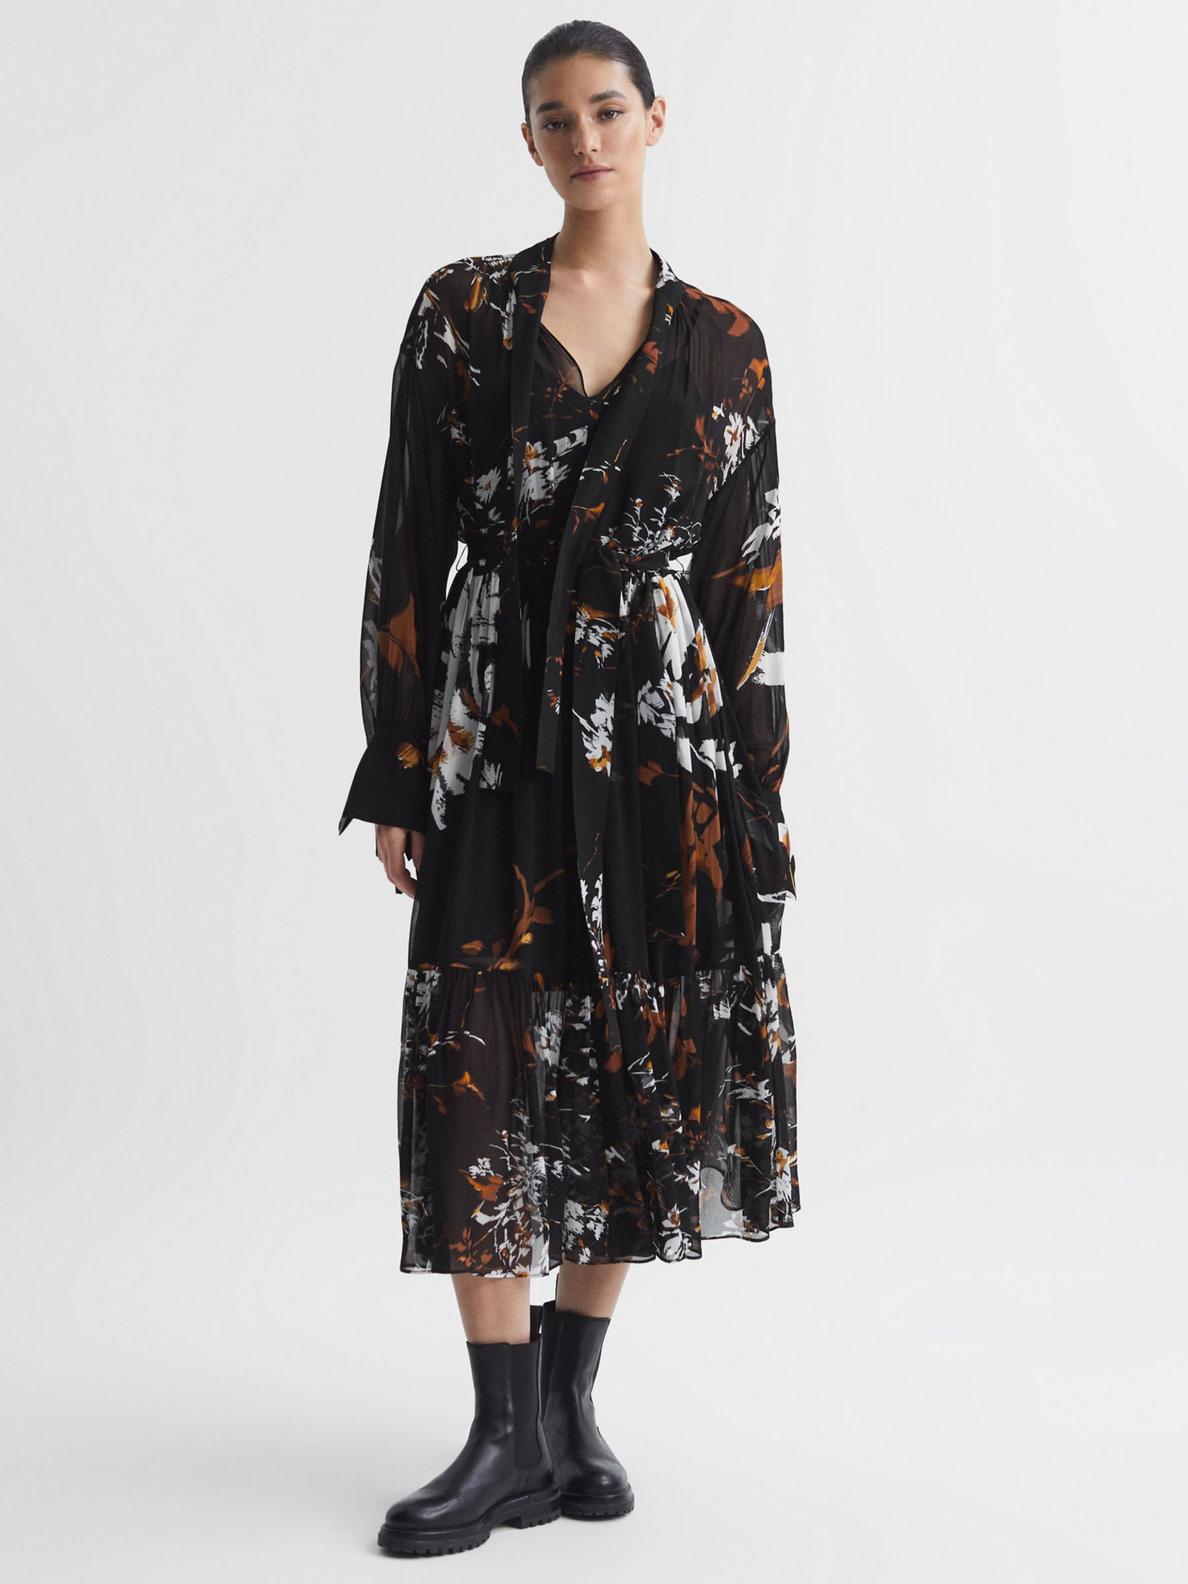 Reiss Charlotte Floral Tie Neck Midi Dress, Black/Multi offers at £118 in John Lewis